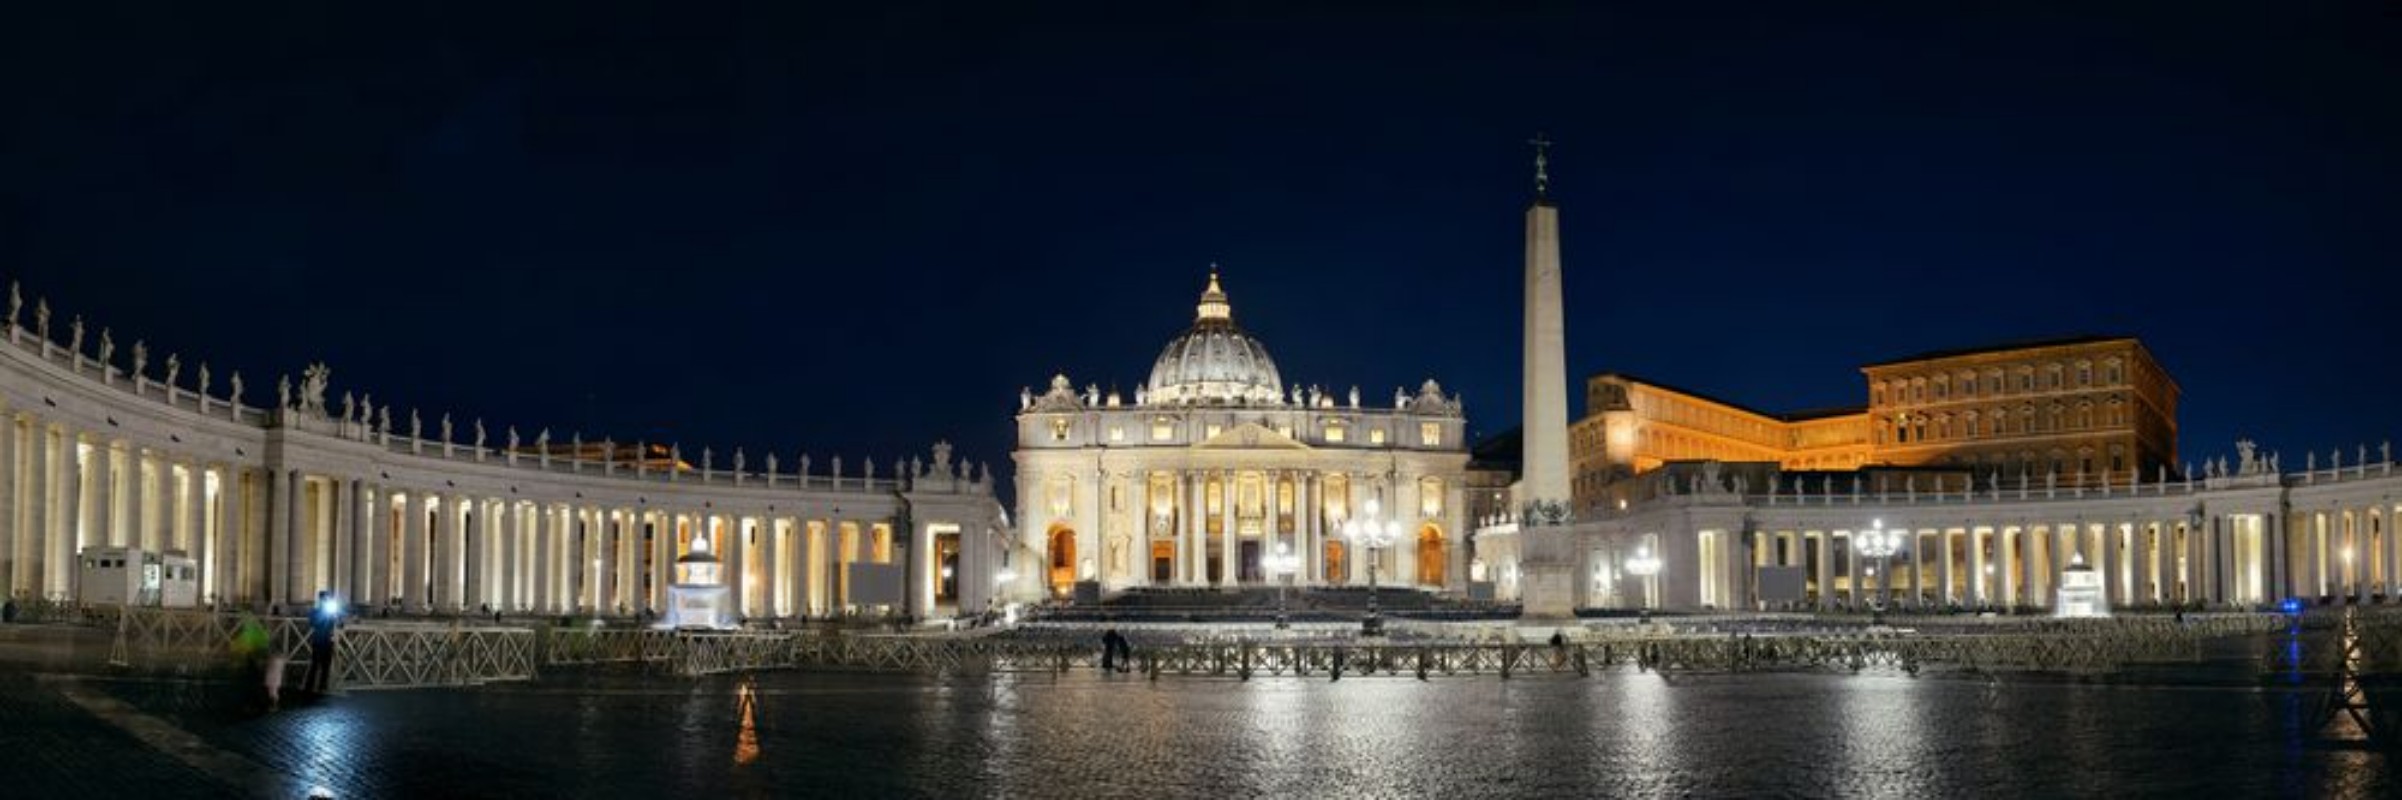 Afbeeldingen van St Peters Basilica at night panorama